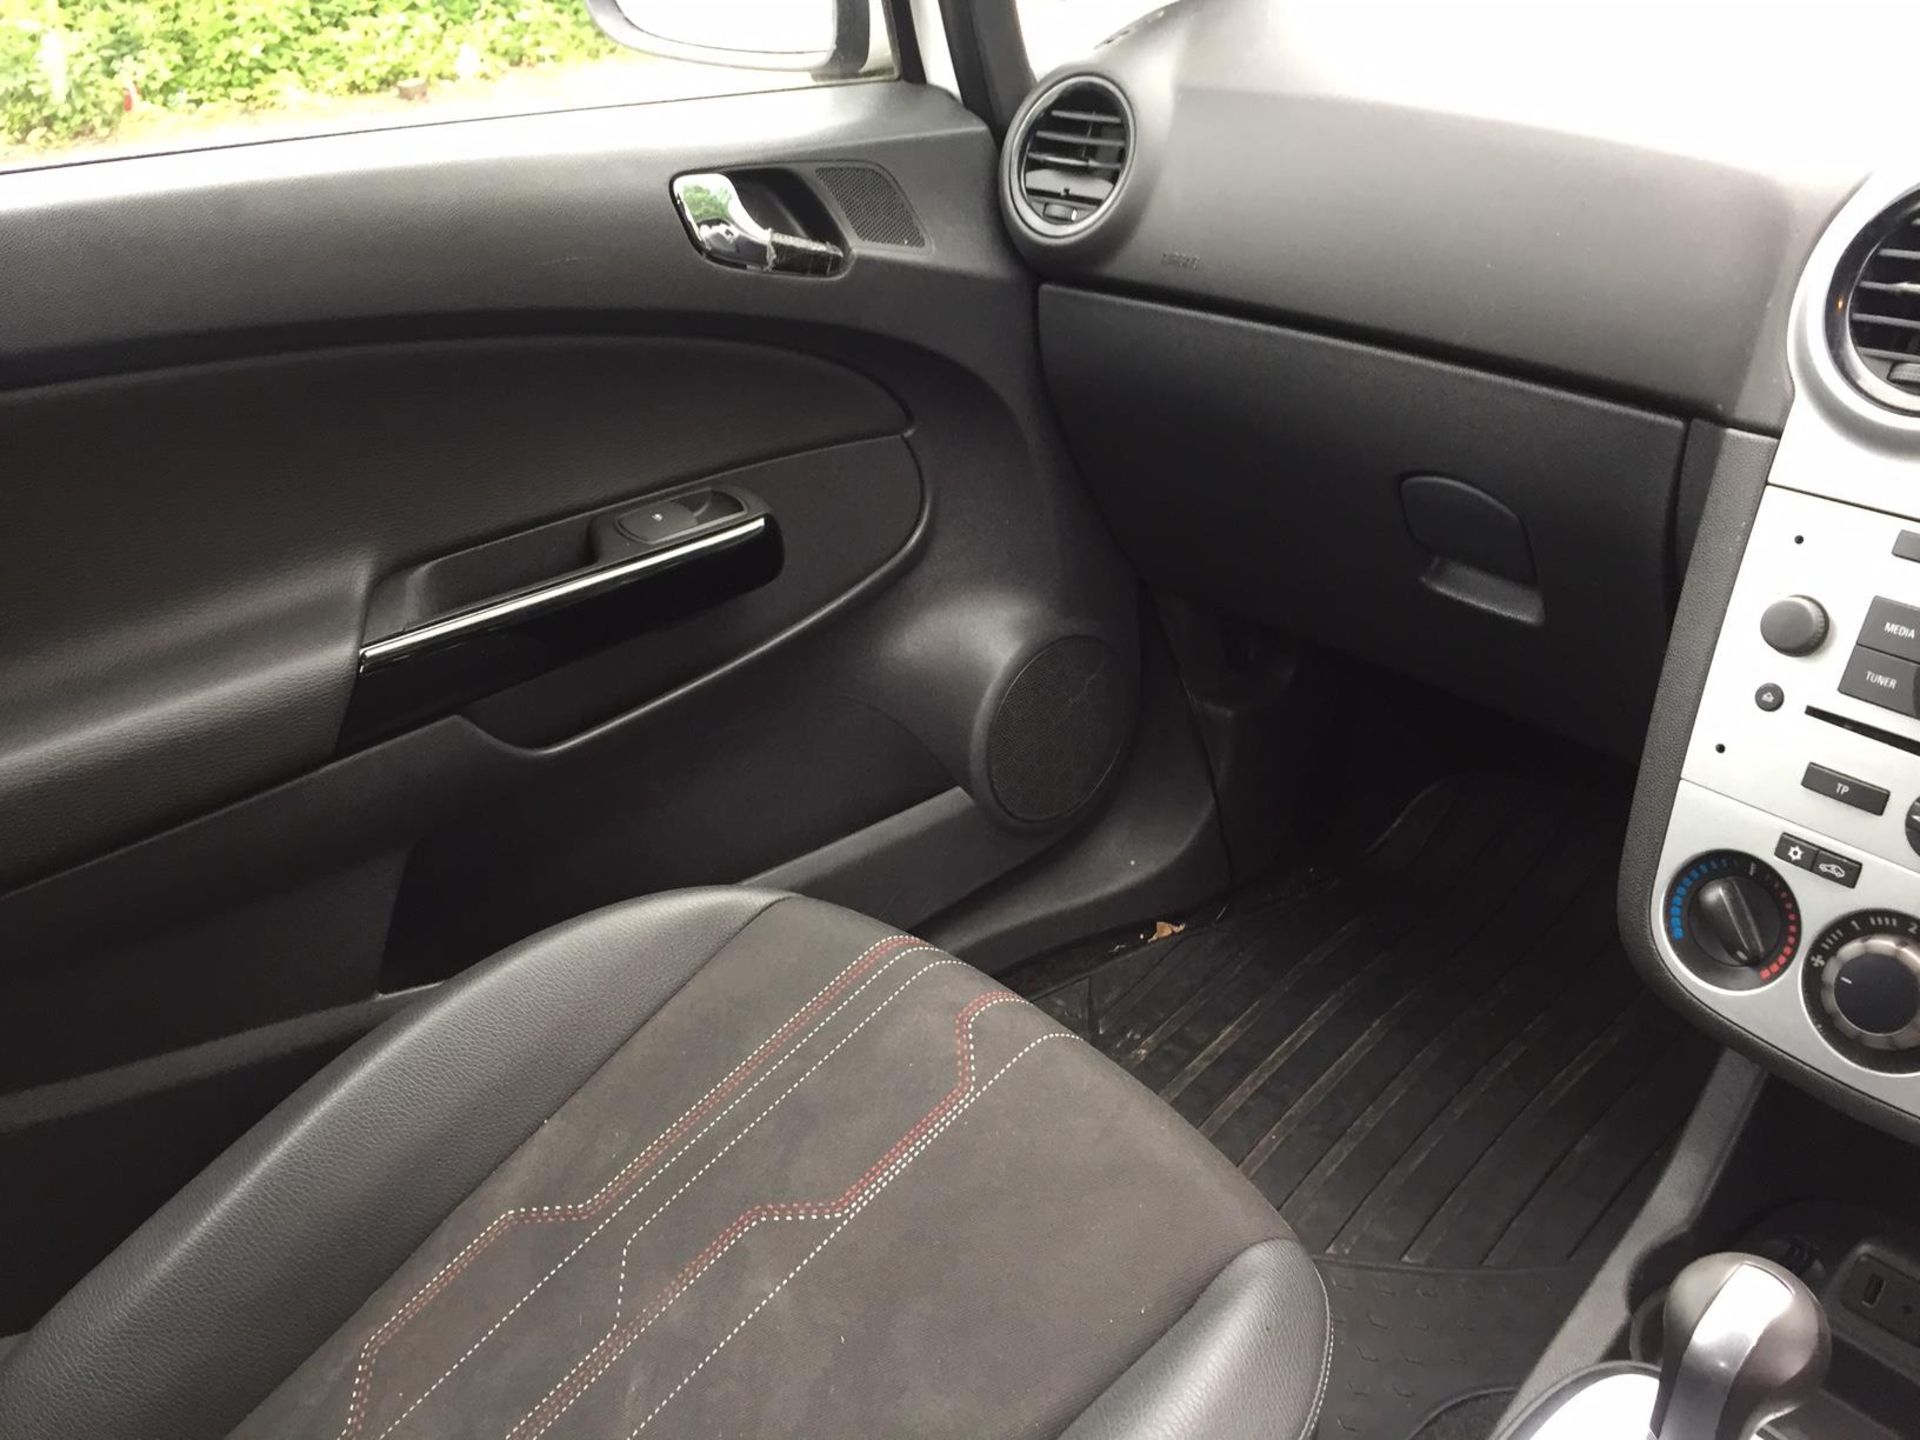 2012 Vauxhall Corsa 1.2 Active Ac S-Automatic 5 Door Hatchback - CL505 - NO VAT ON THE HAMMER - Loca - Image 2 of 14